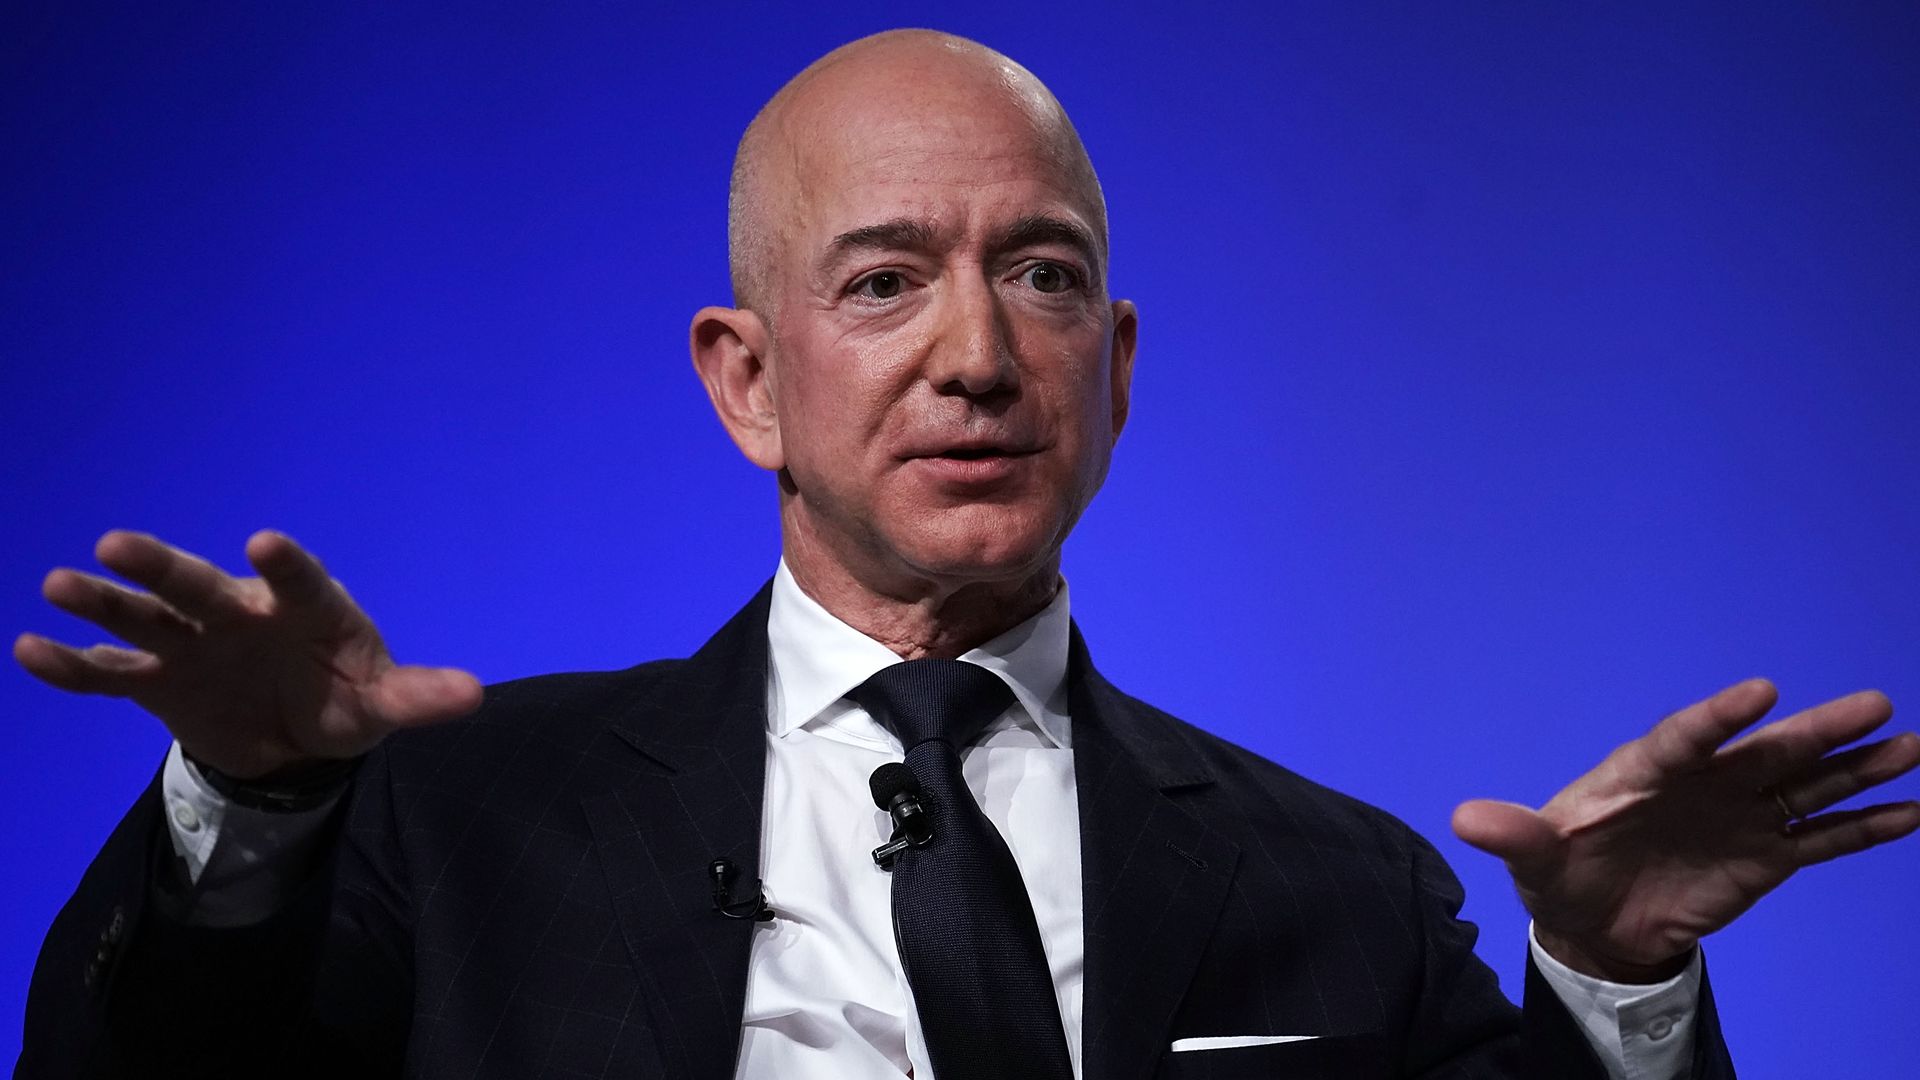 Amazon CEO Jeff Bezos gestures as he speaks